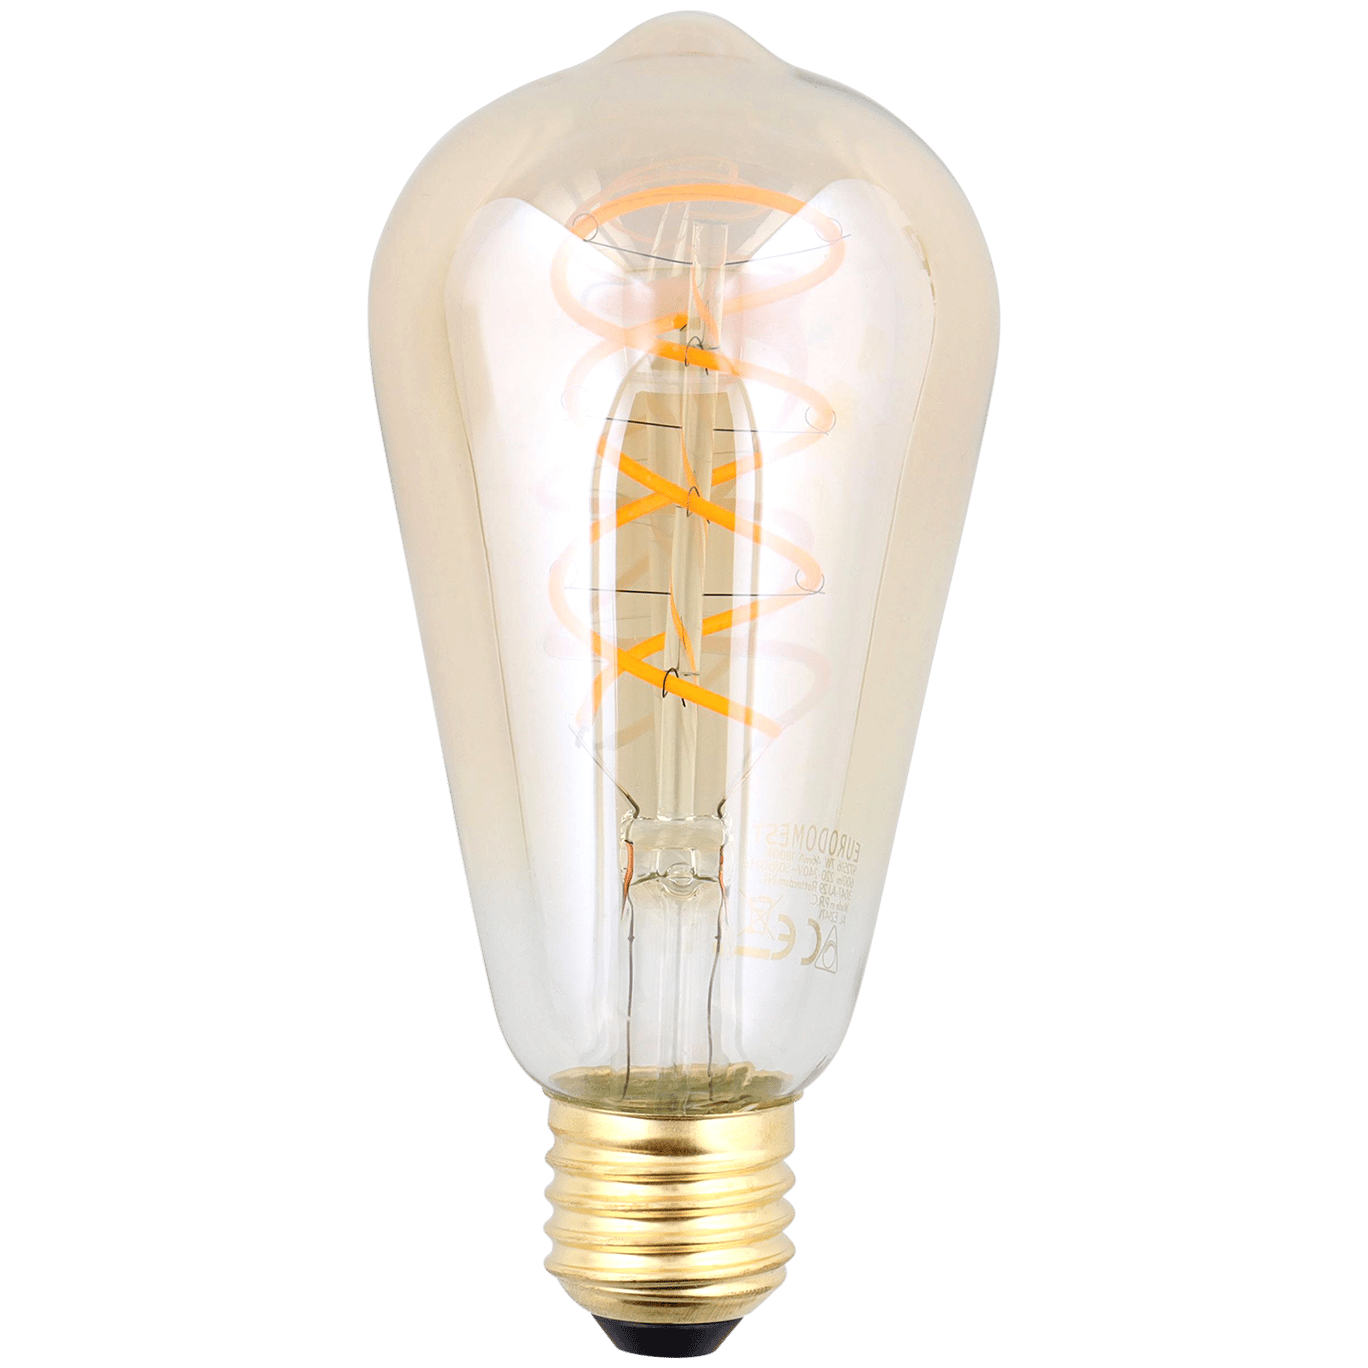 fee Democratie overtuigen Eurodomest retro filament-ledlamp | Action.com